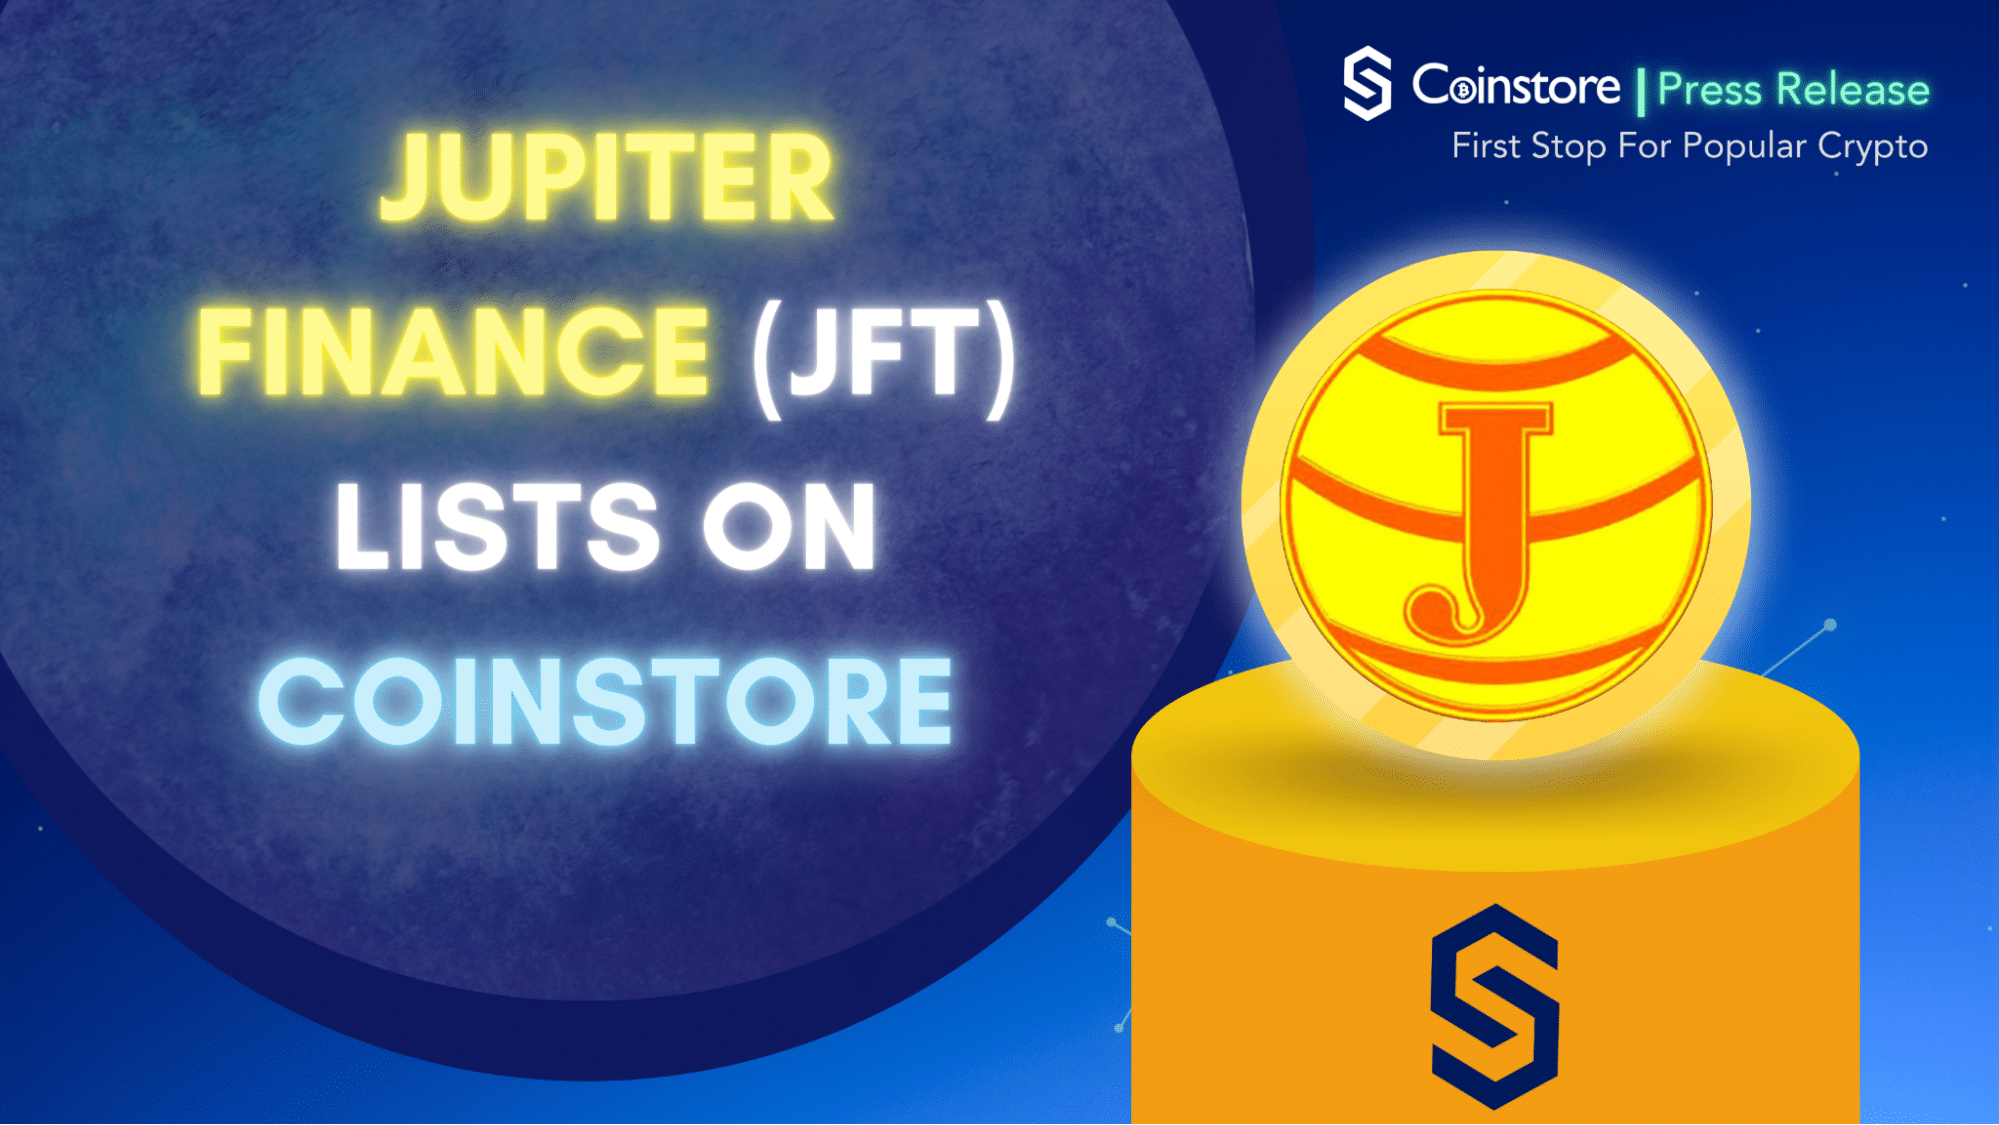 The Next Generation DEX - Jupiter Finance (JFT) lists on Coinstore - 1